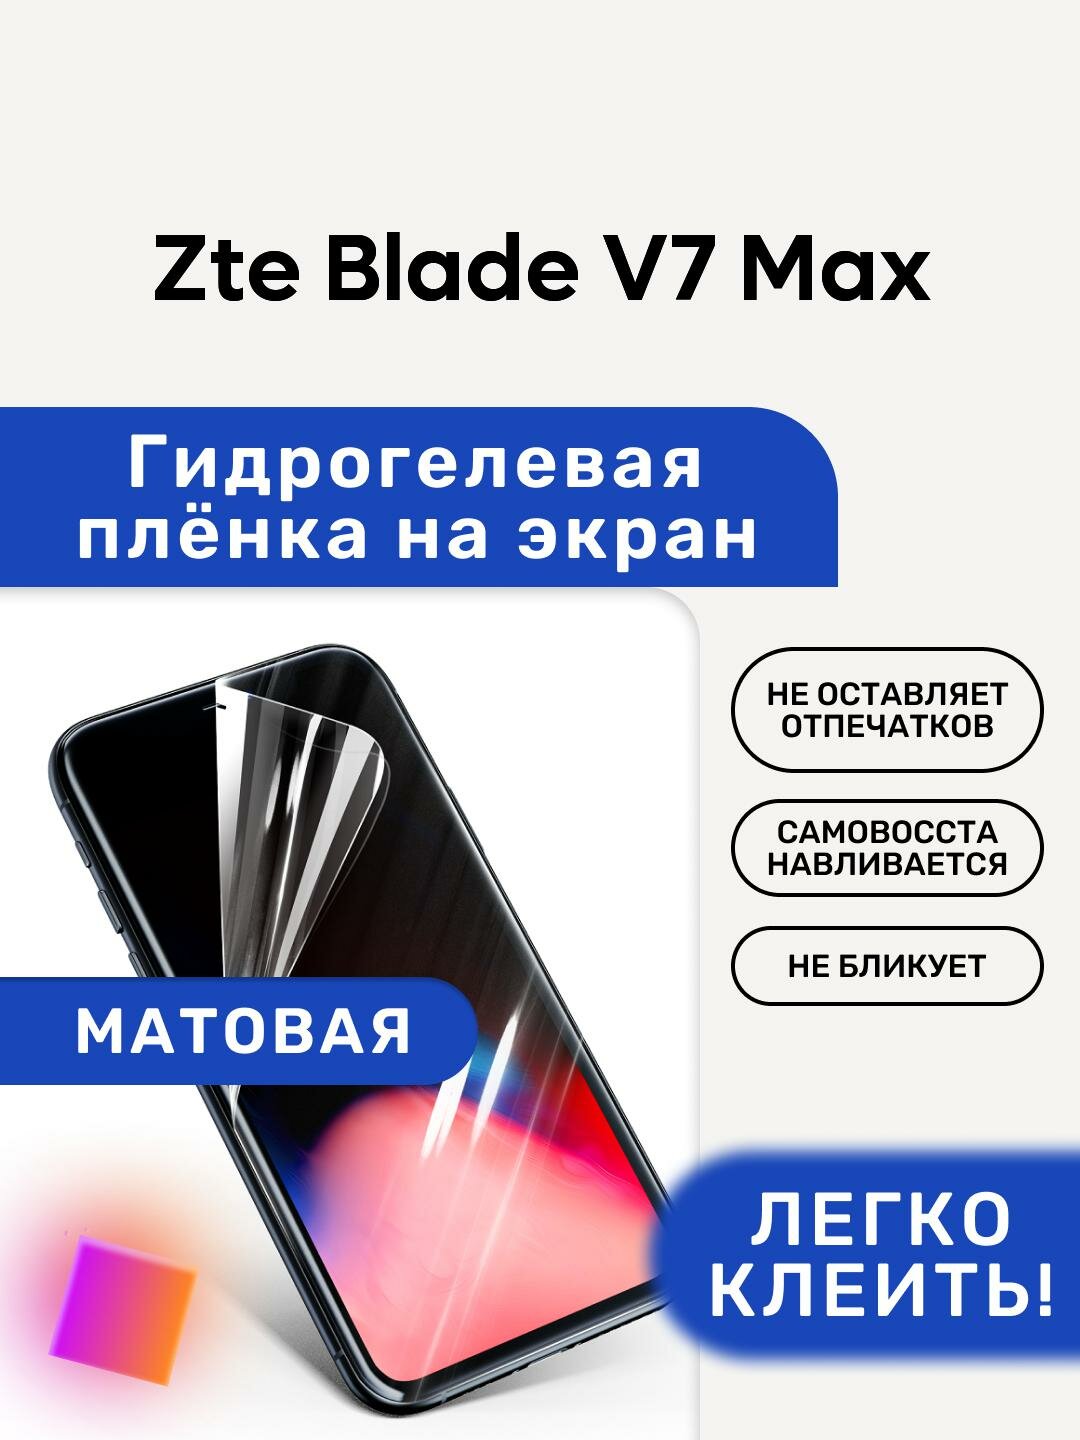 Матовая Гидрогелевая плёнка, полиуретановая, защита экрана Zte Blade V7 Max